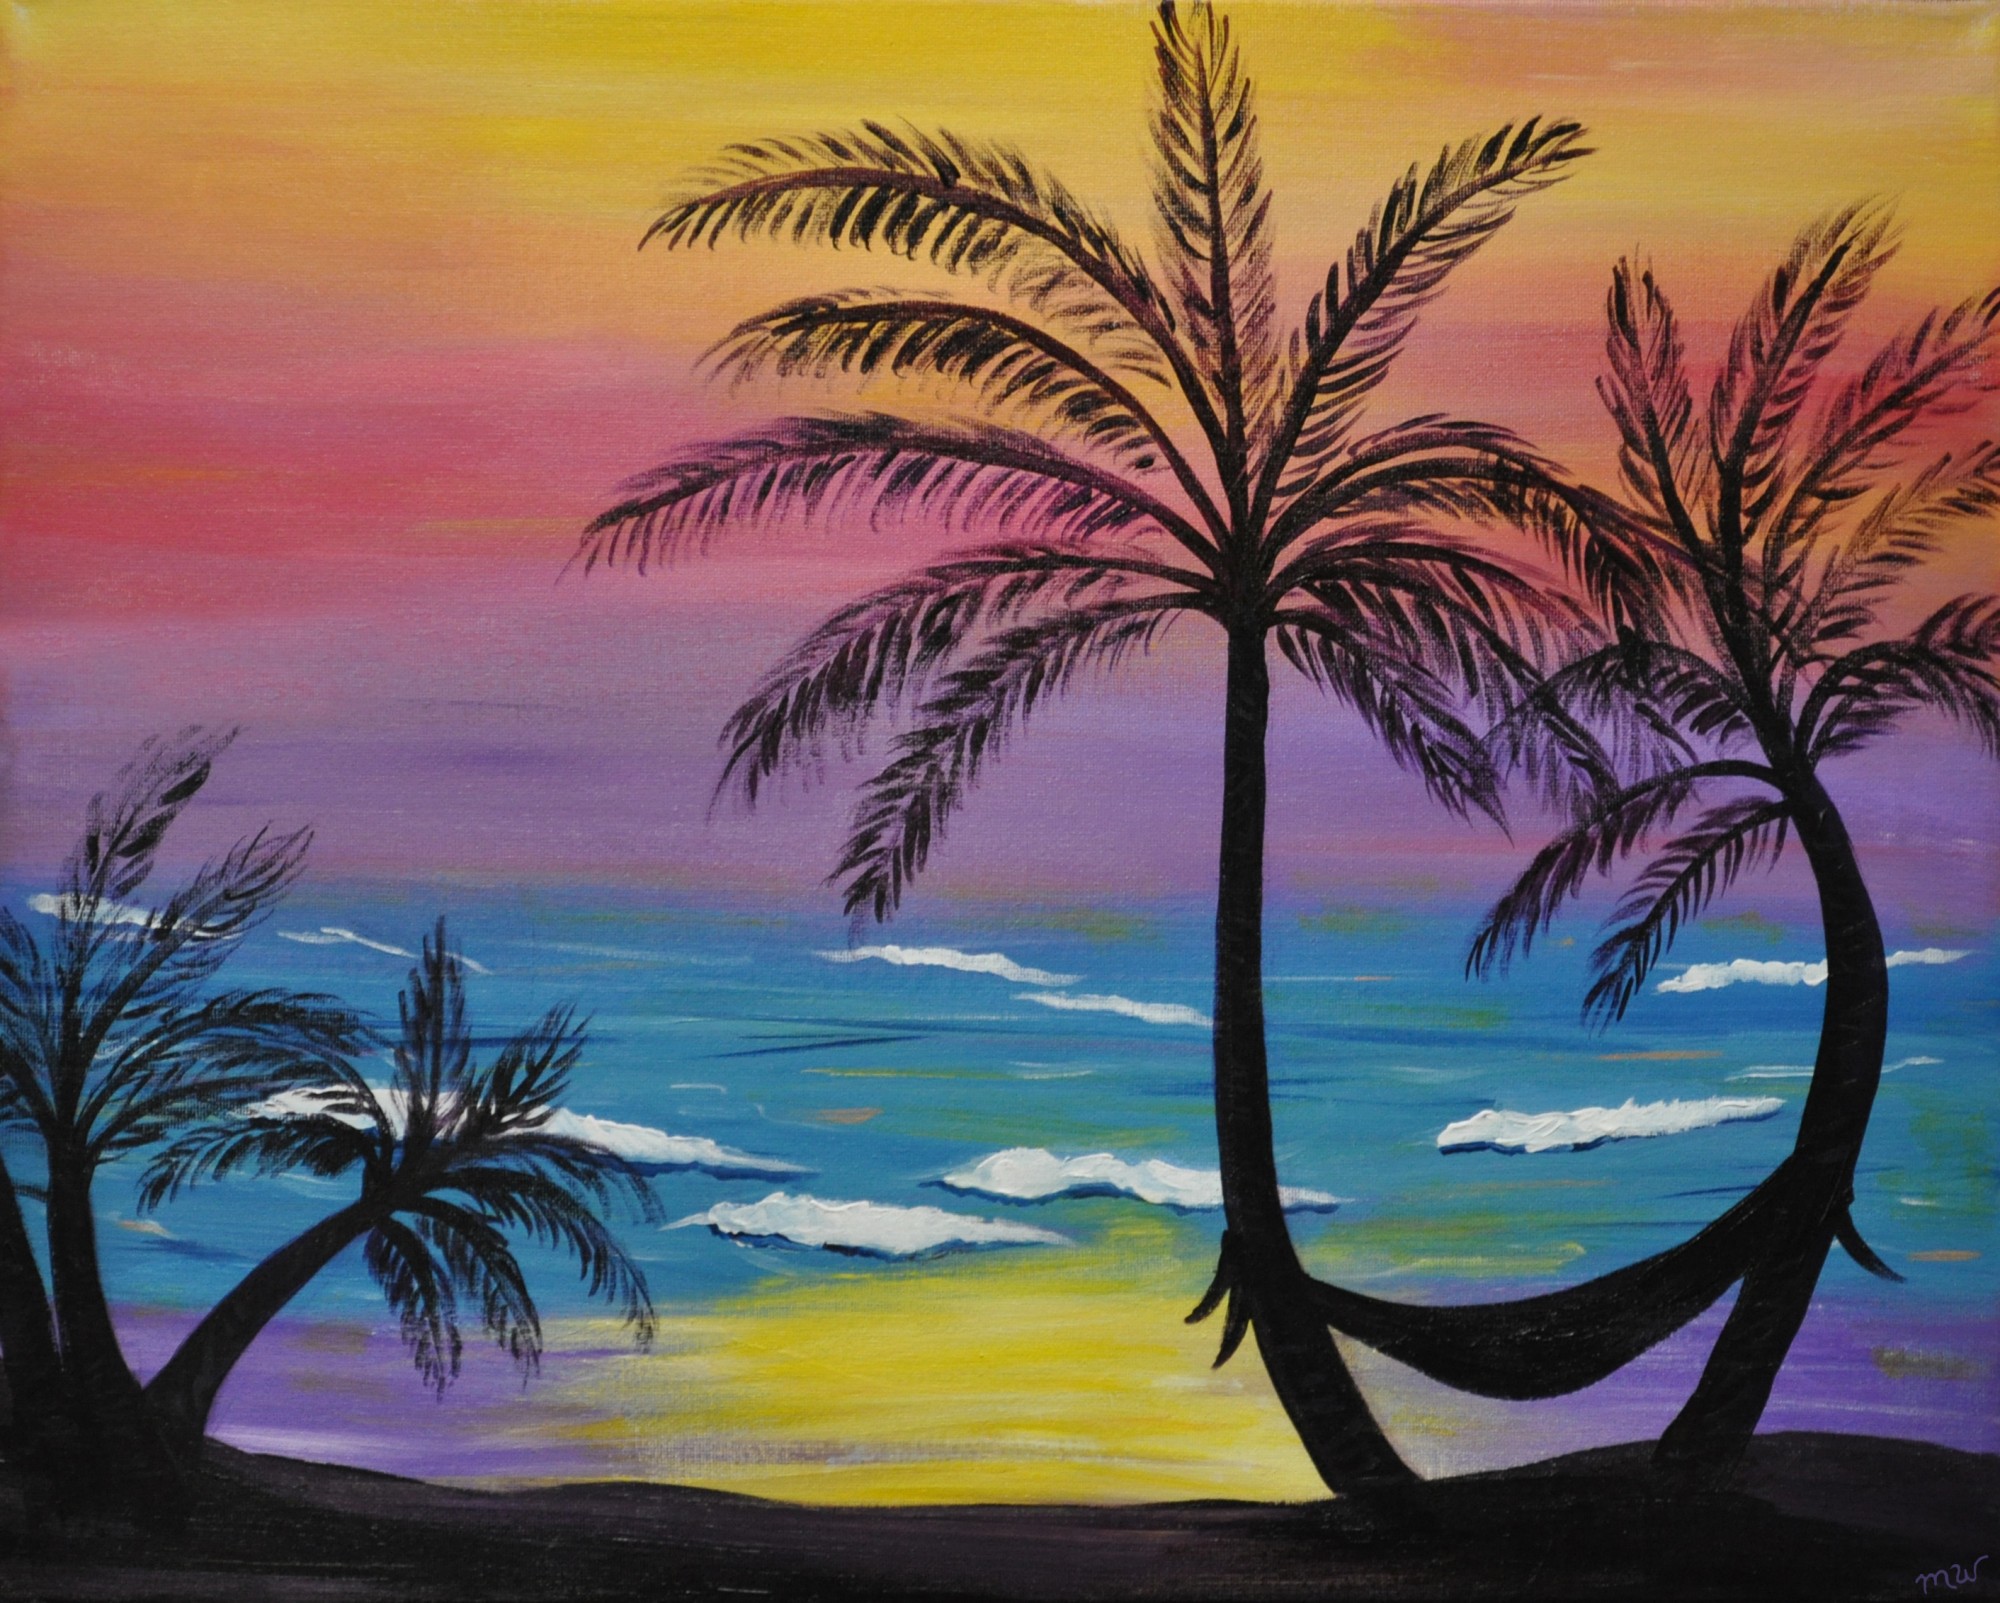 Painting Party! "Tropical Paradise" (Jun 17, 2016) - Muncie Events